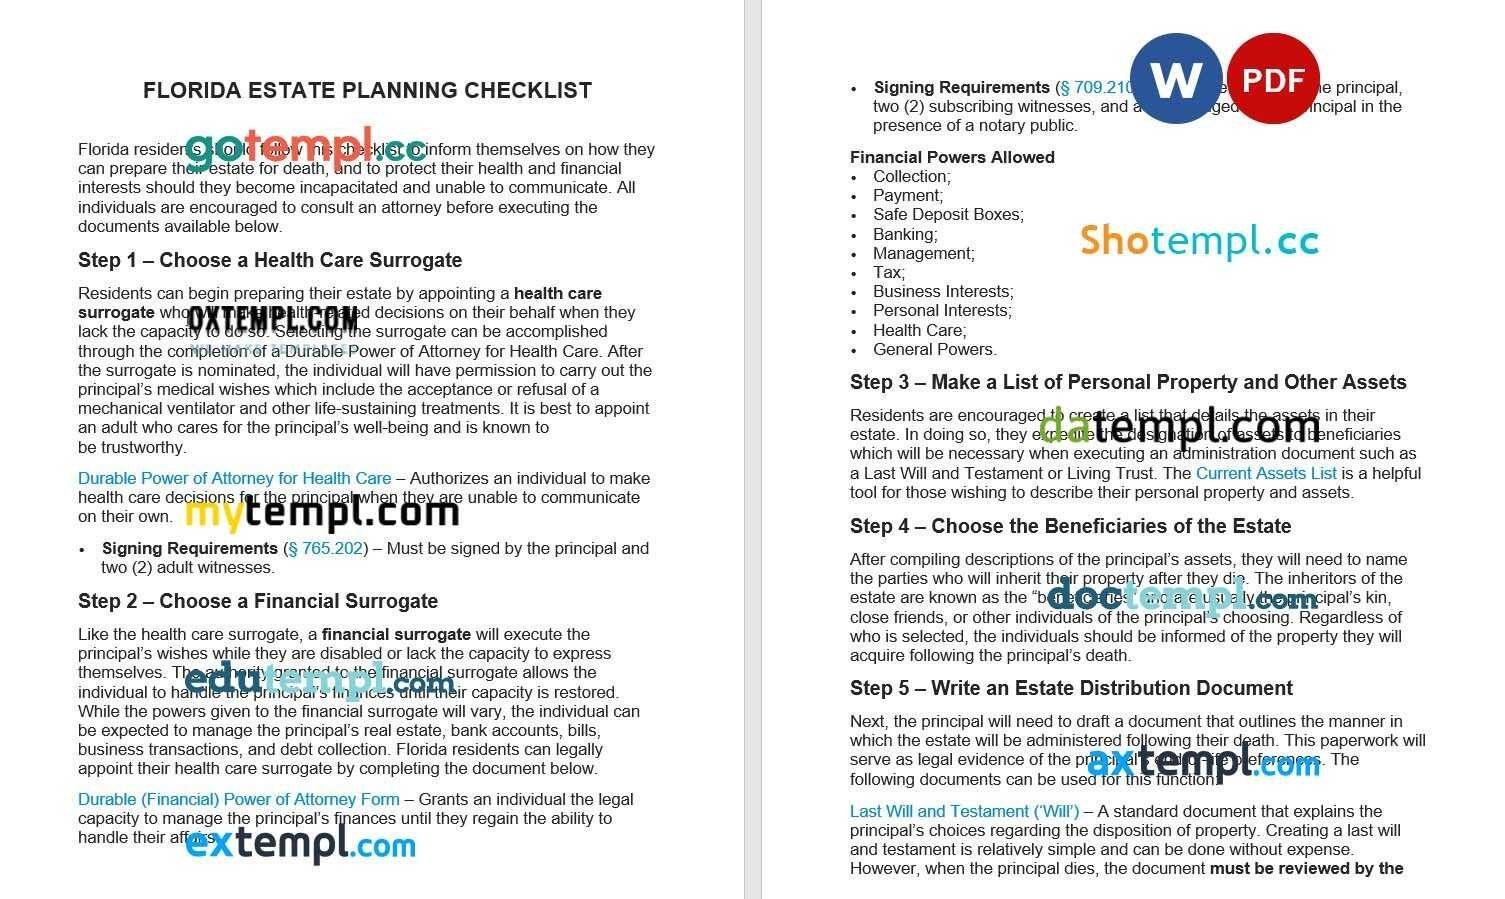 Florida Estate Planning Checklist example, fully editable